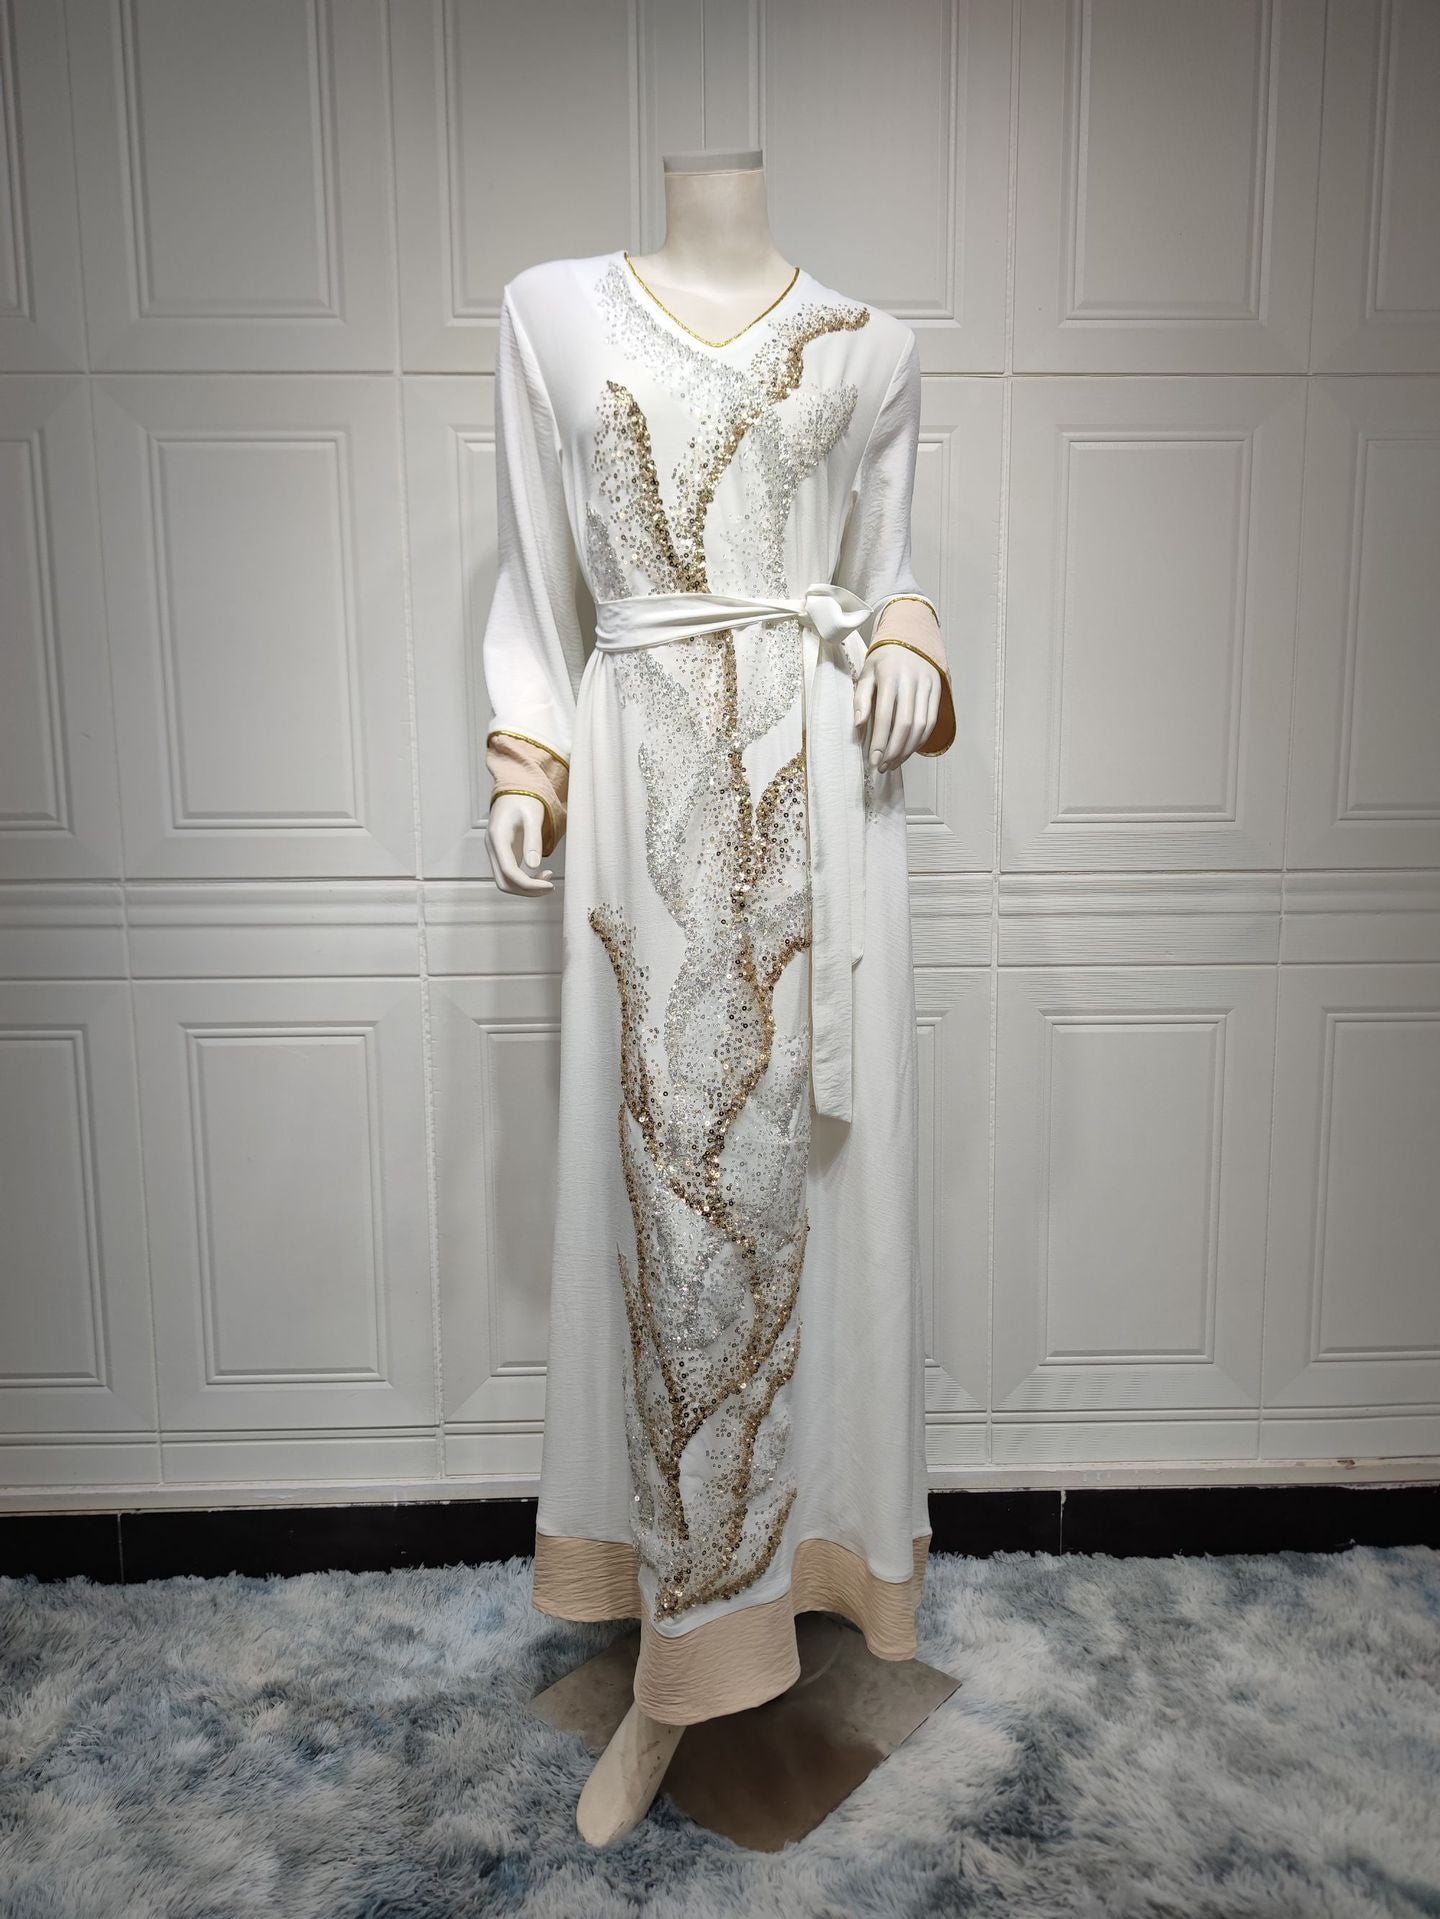 BamBam Muslim Robe Beaded Embroidery Fashion Abaya Arab Ladies Home Casual Dress - BamBam